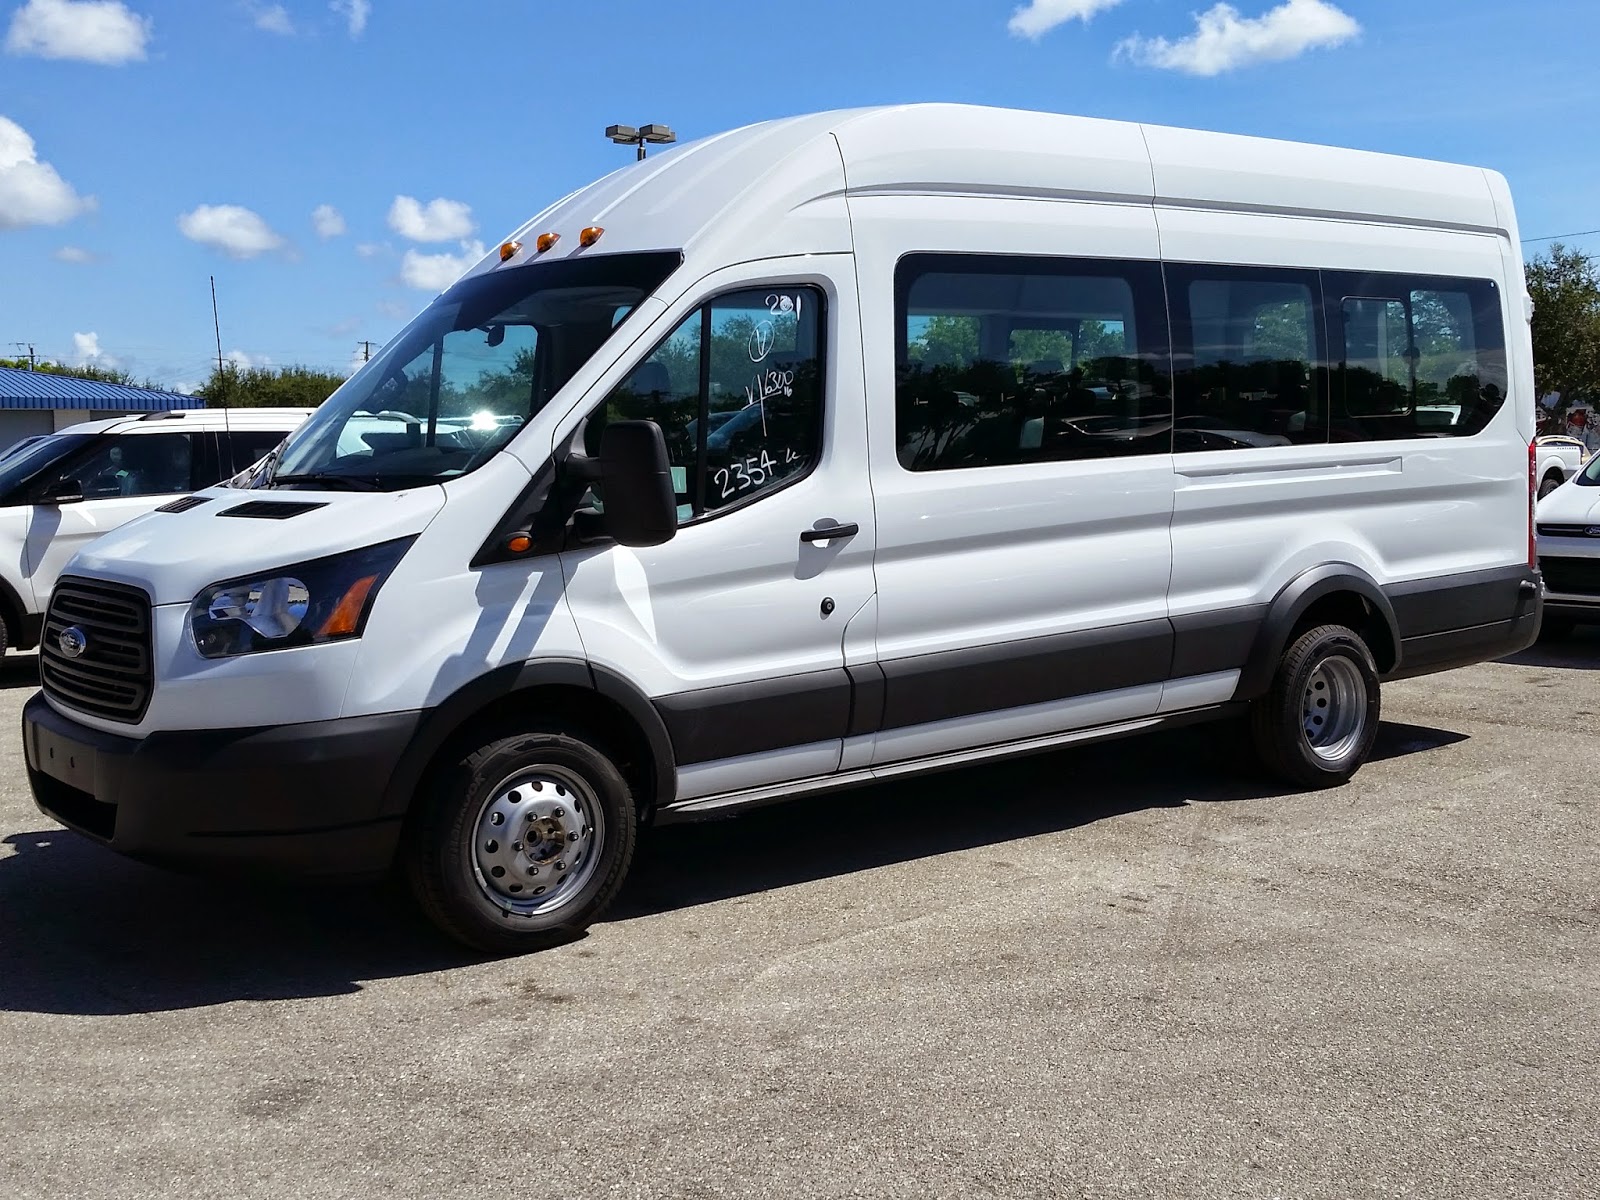 Ford Trucks And Transit Vans In Naples Fl 15 Passenger Van Is Here Now